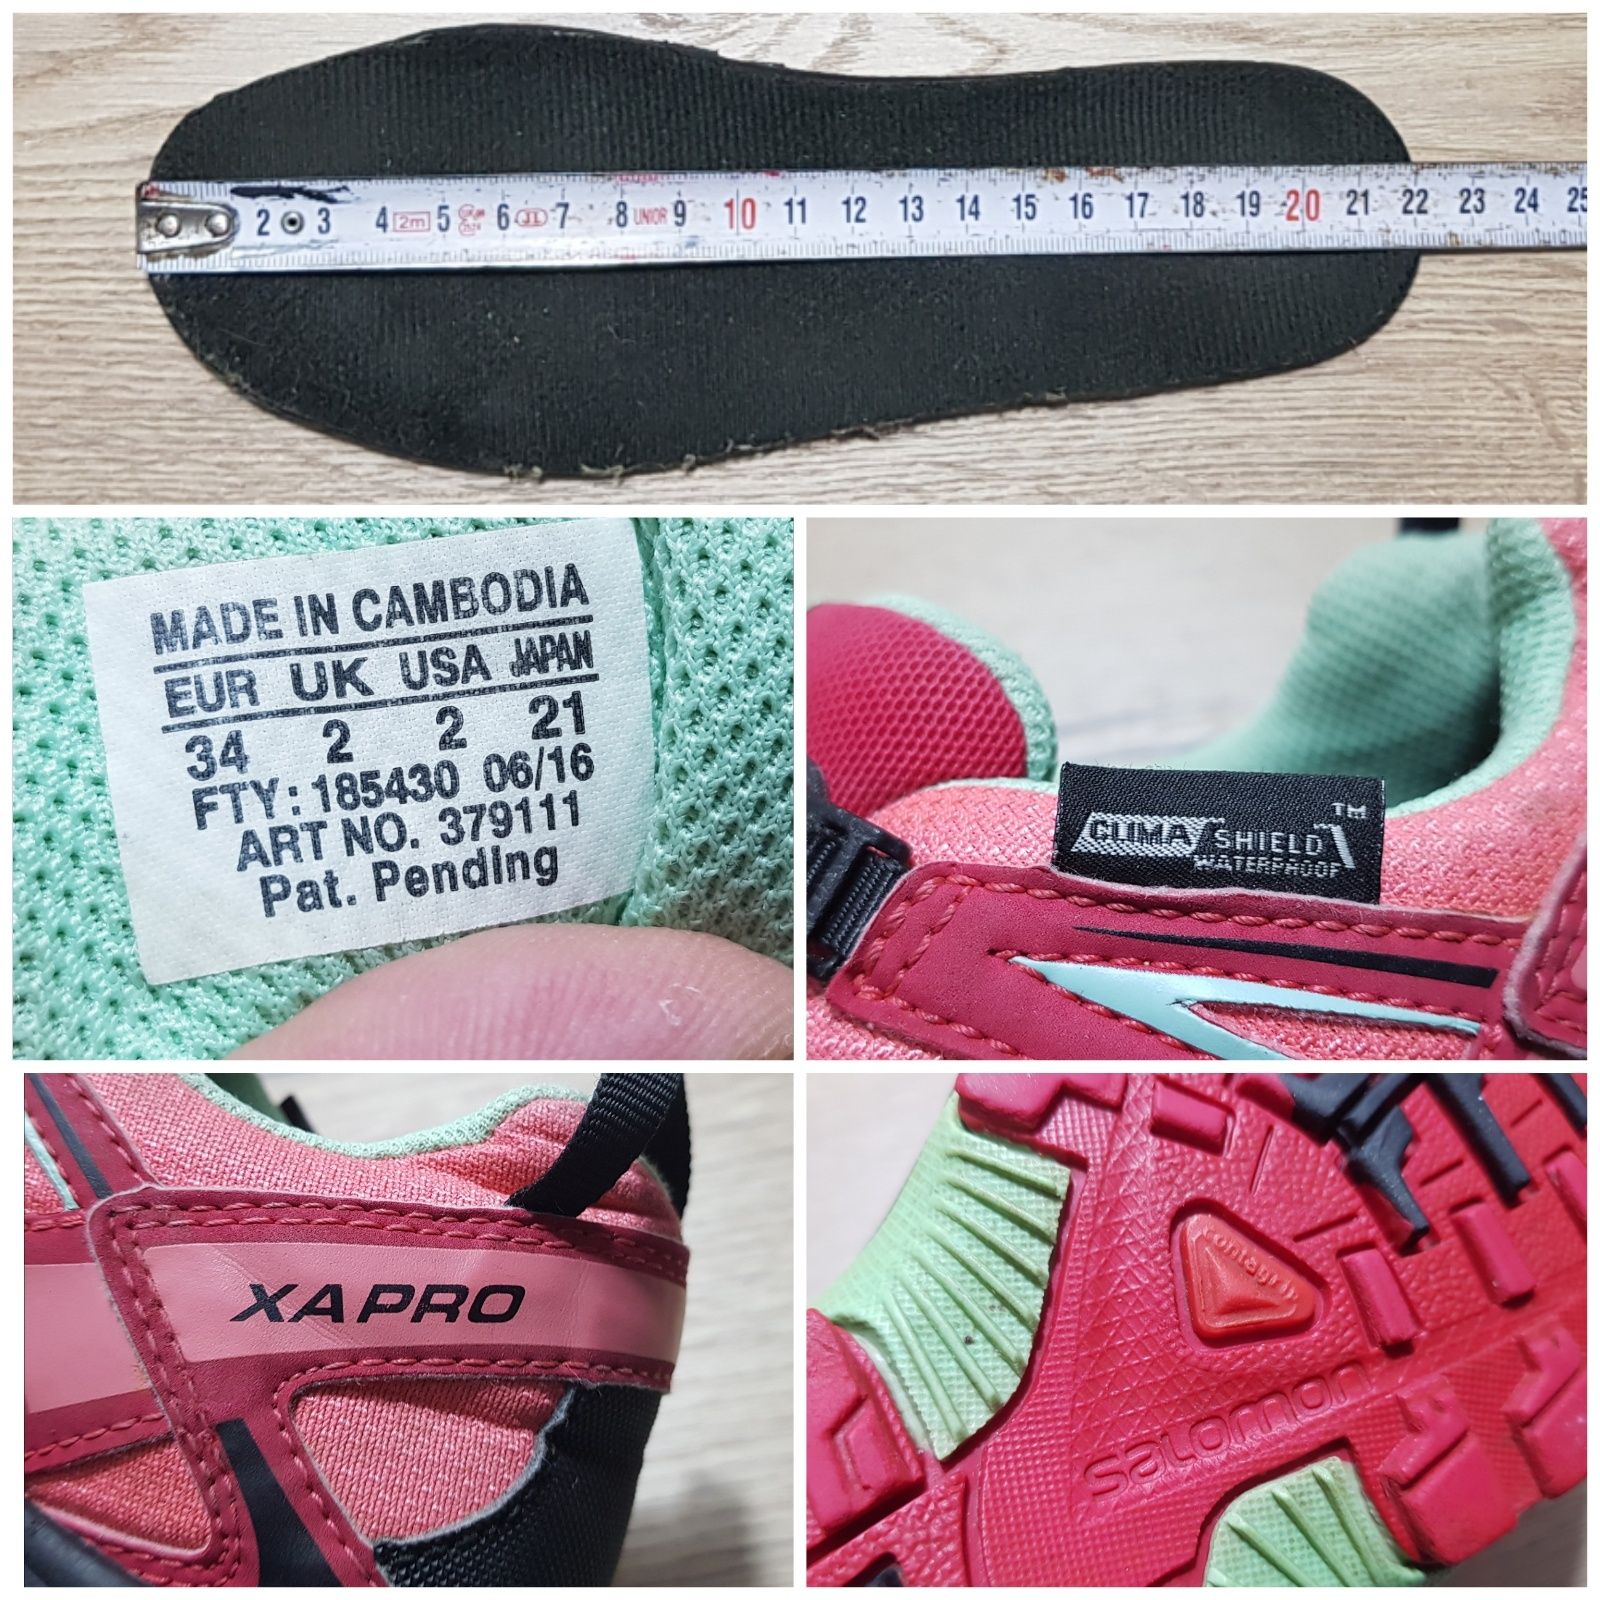 Ghete Salomon XA PRO 3D CSWP, pantofi Waterproof, nr 34 EU